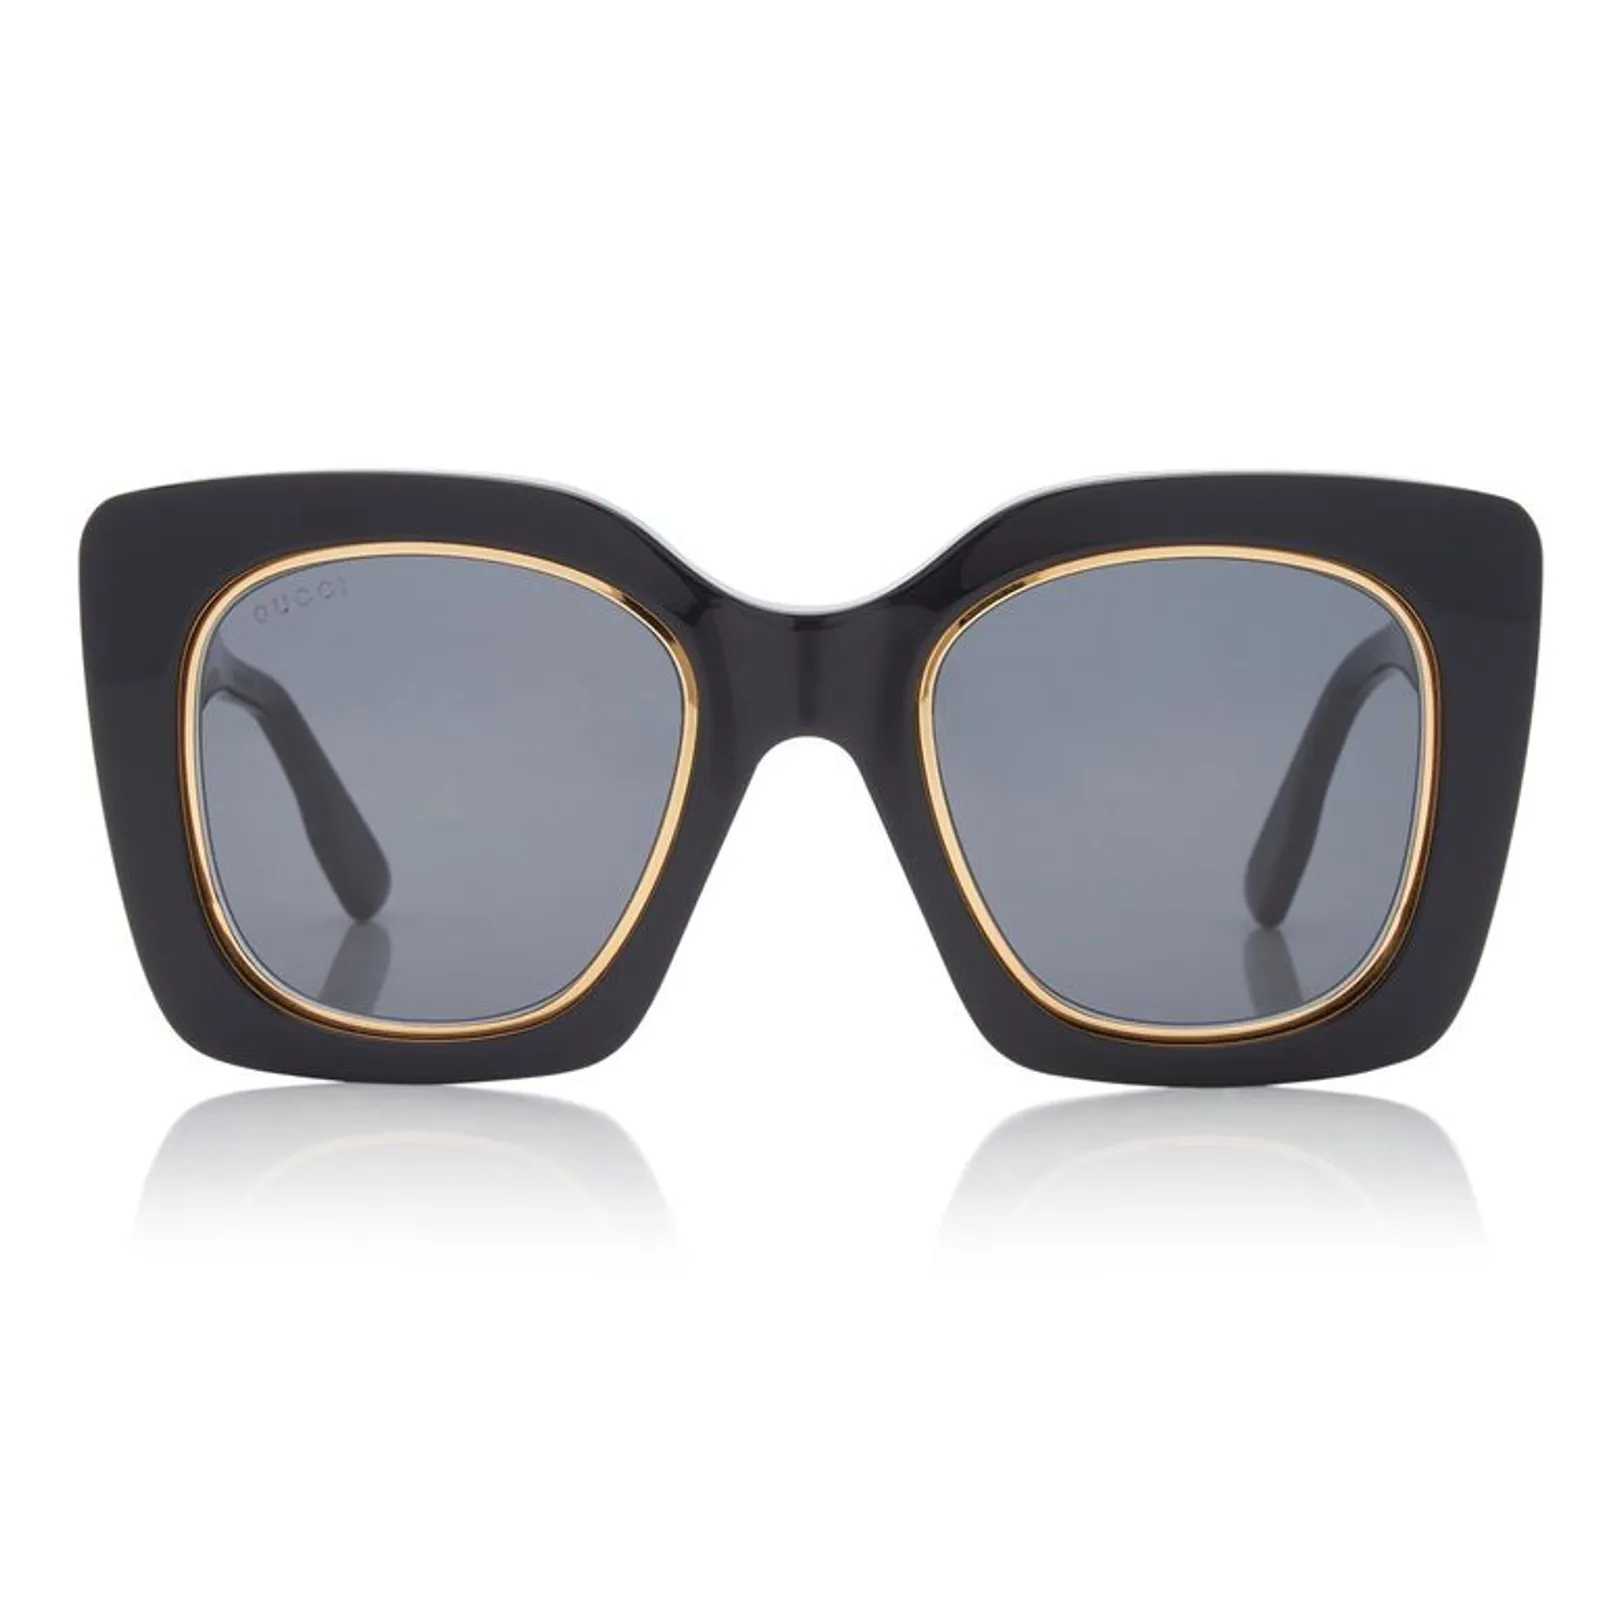 #PopbelaOOTD: Saatnya Tampil Statement Pakai Oversized Sunglasses!